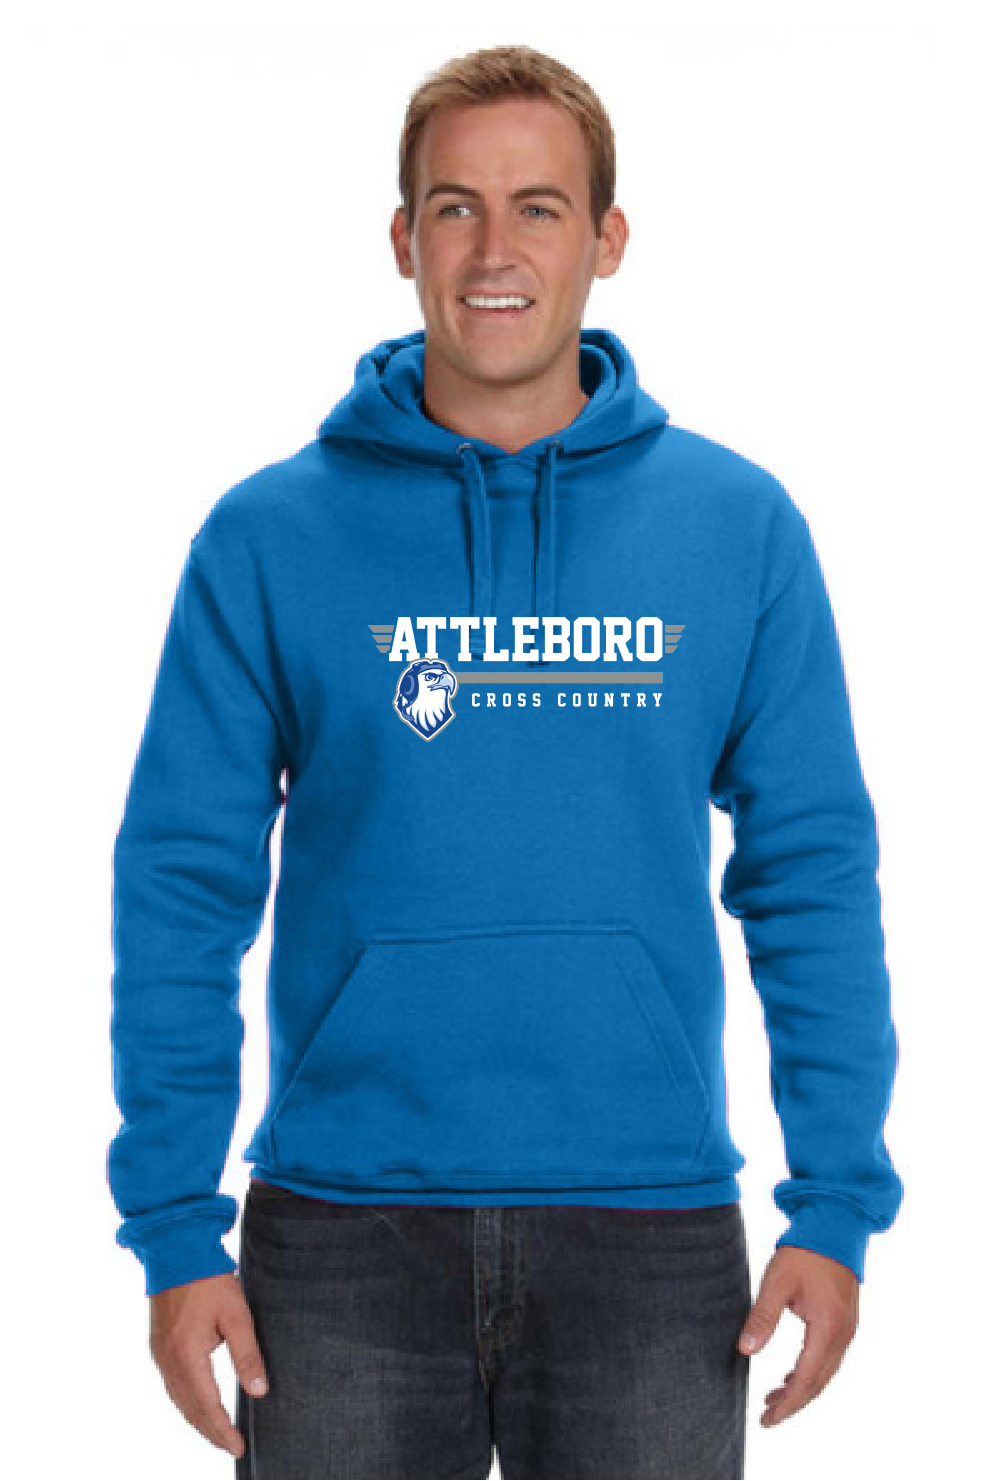 Attleboro Cross Country Premium Pullover Hooded Sweatshirt (JA8824)